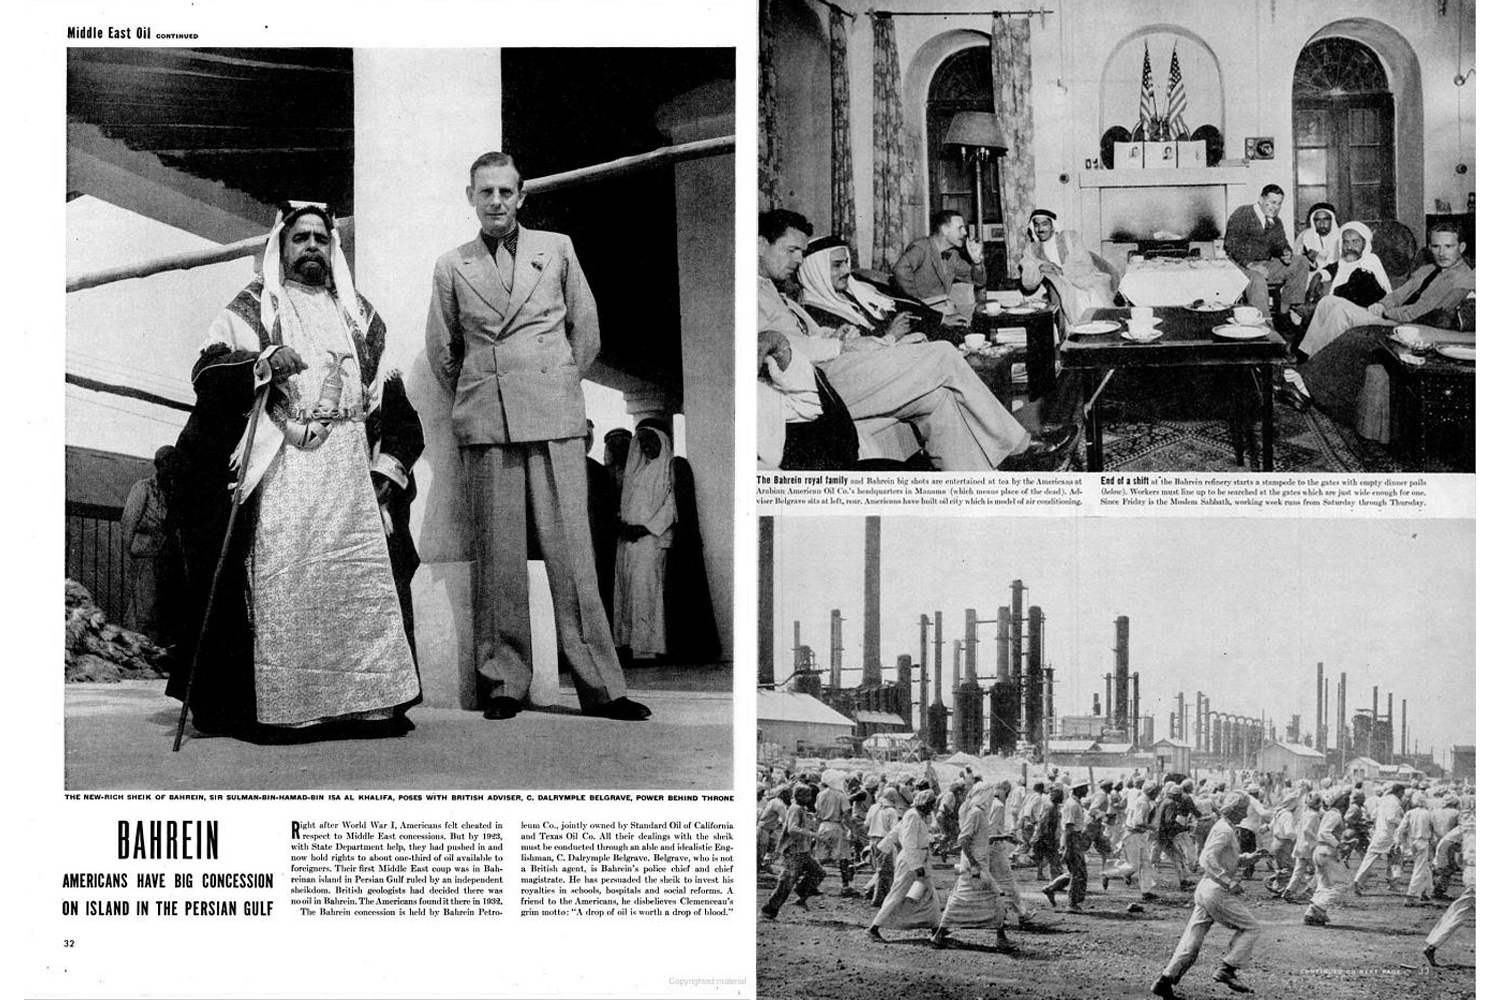 Middle East Oil by Dmitri Kessel, June 1945, LIFE Magazine